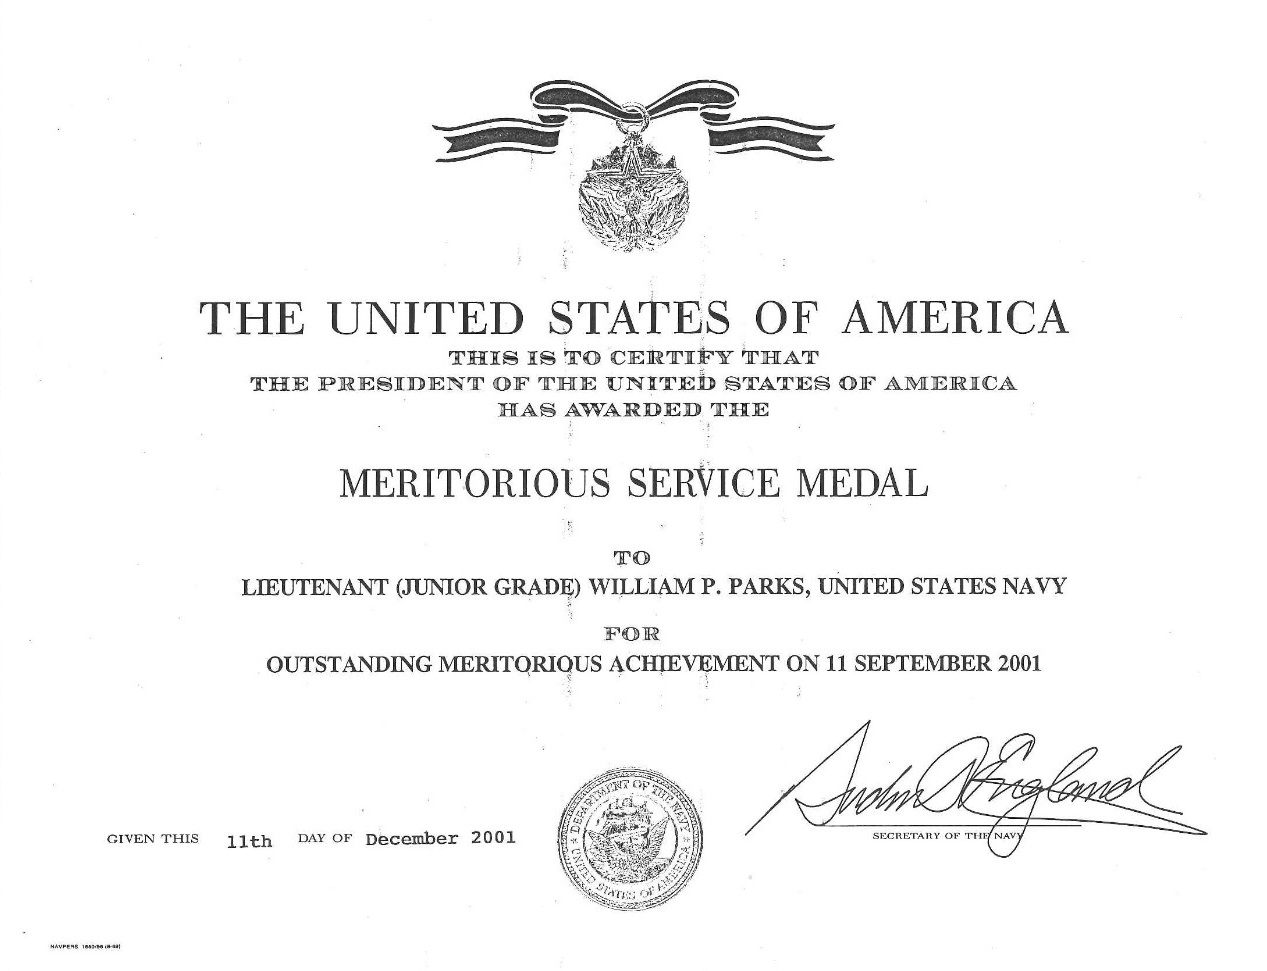 Parks, William ENS Meritorious Service Medal